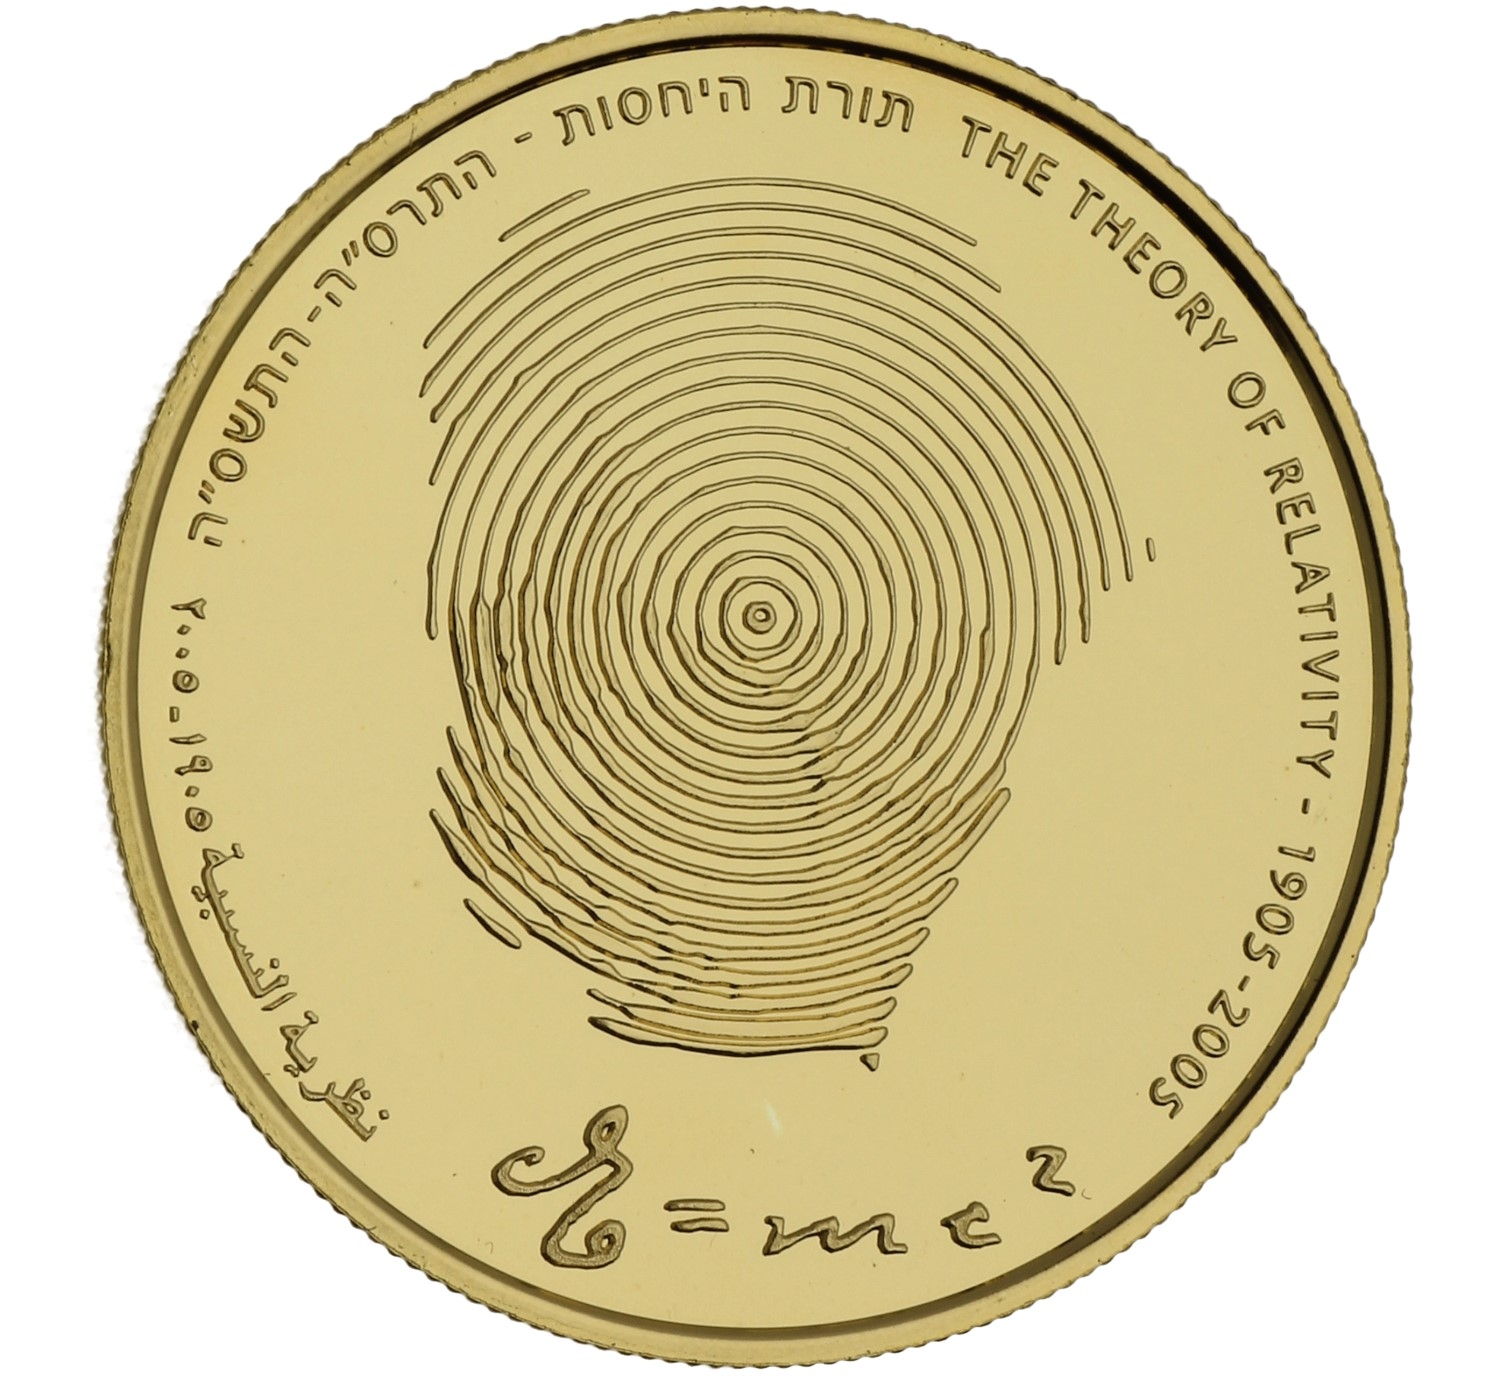 10 New Sheqalim - Israel - 2005